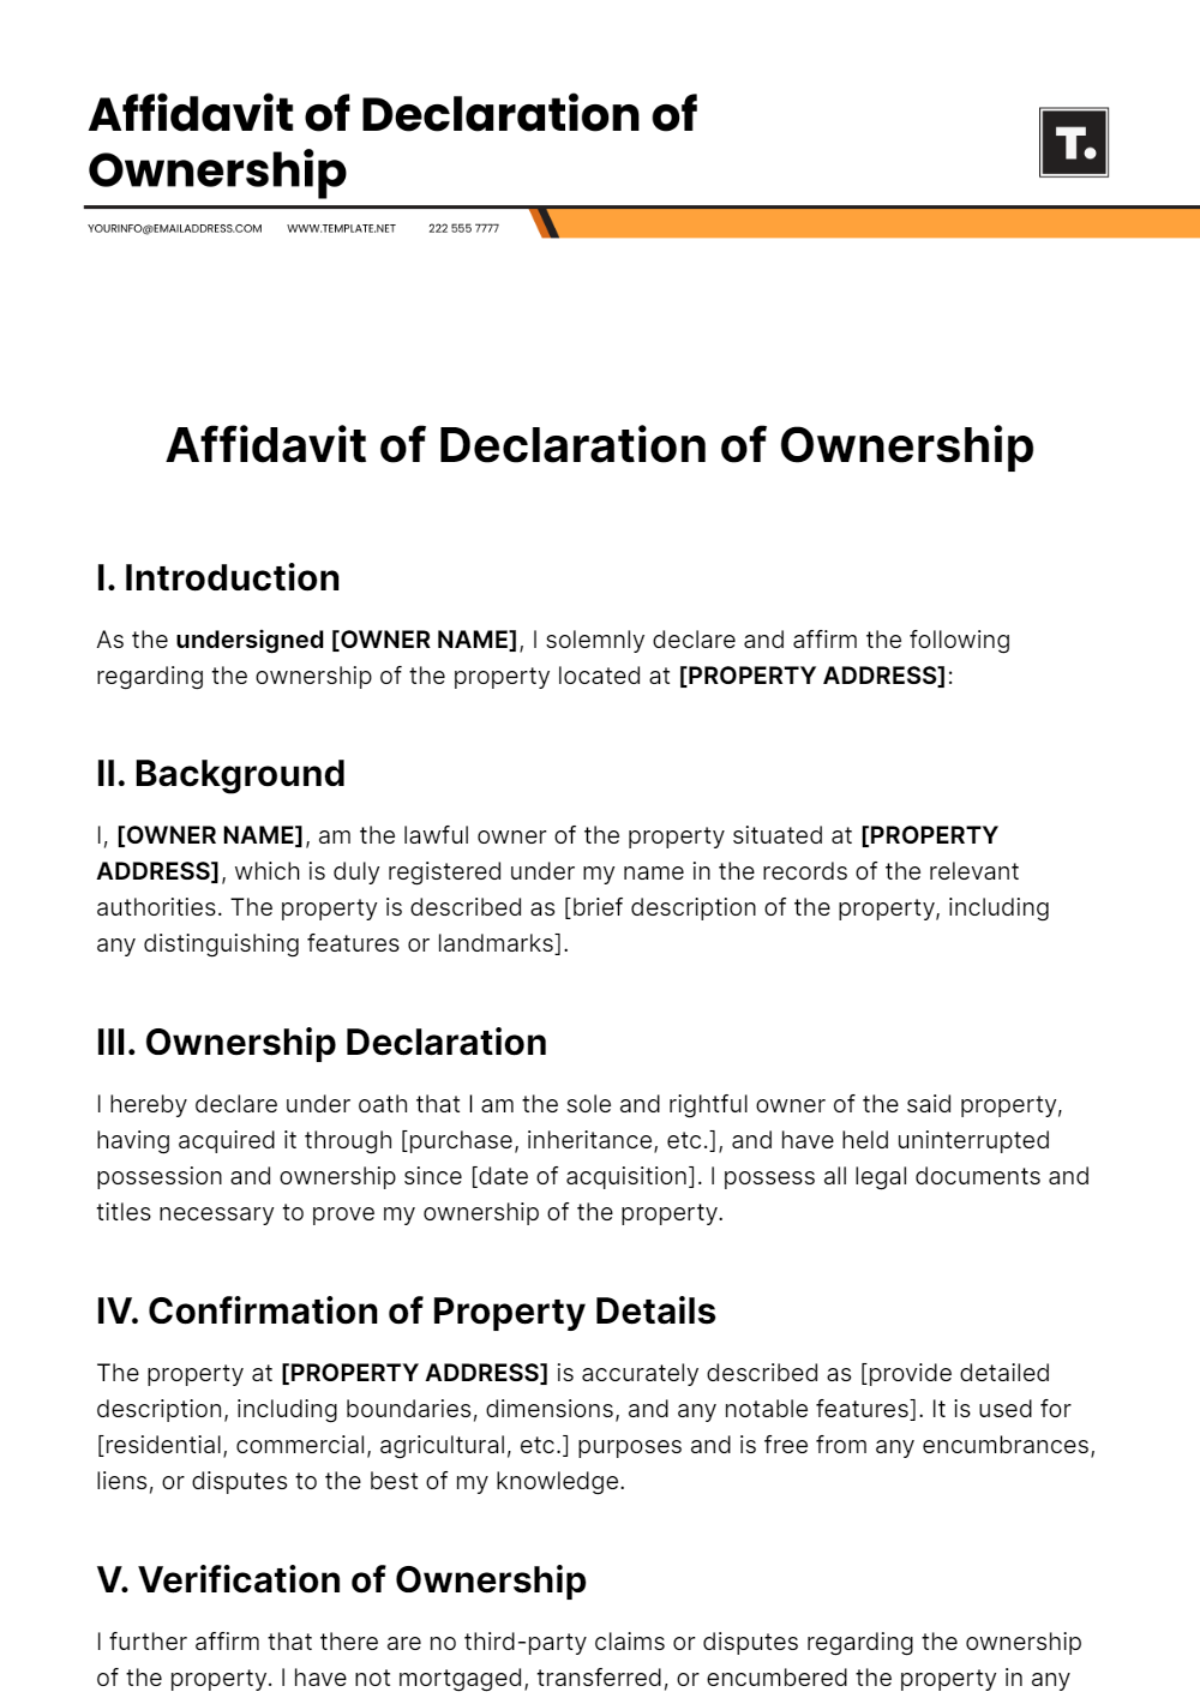 Free Affidavit of Declaration of Ownership Template